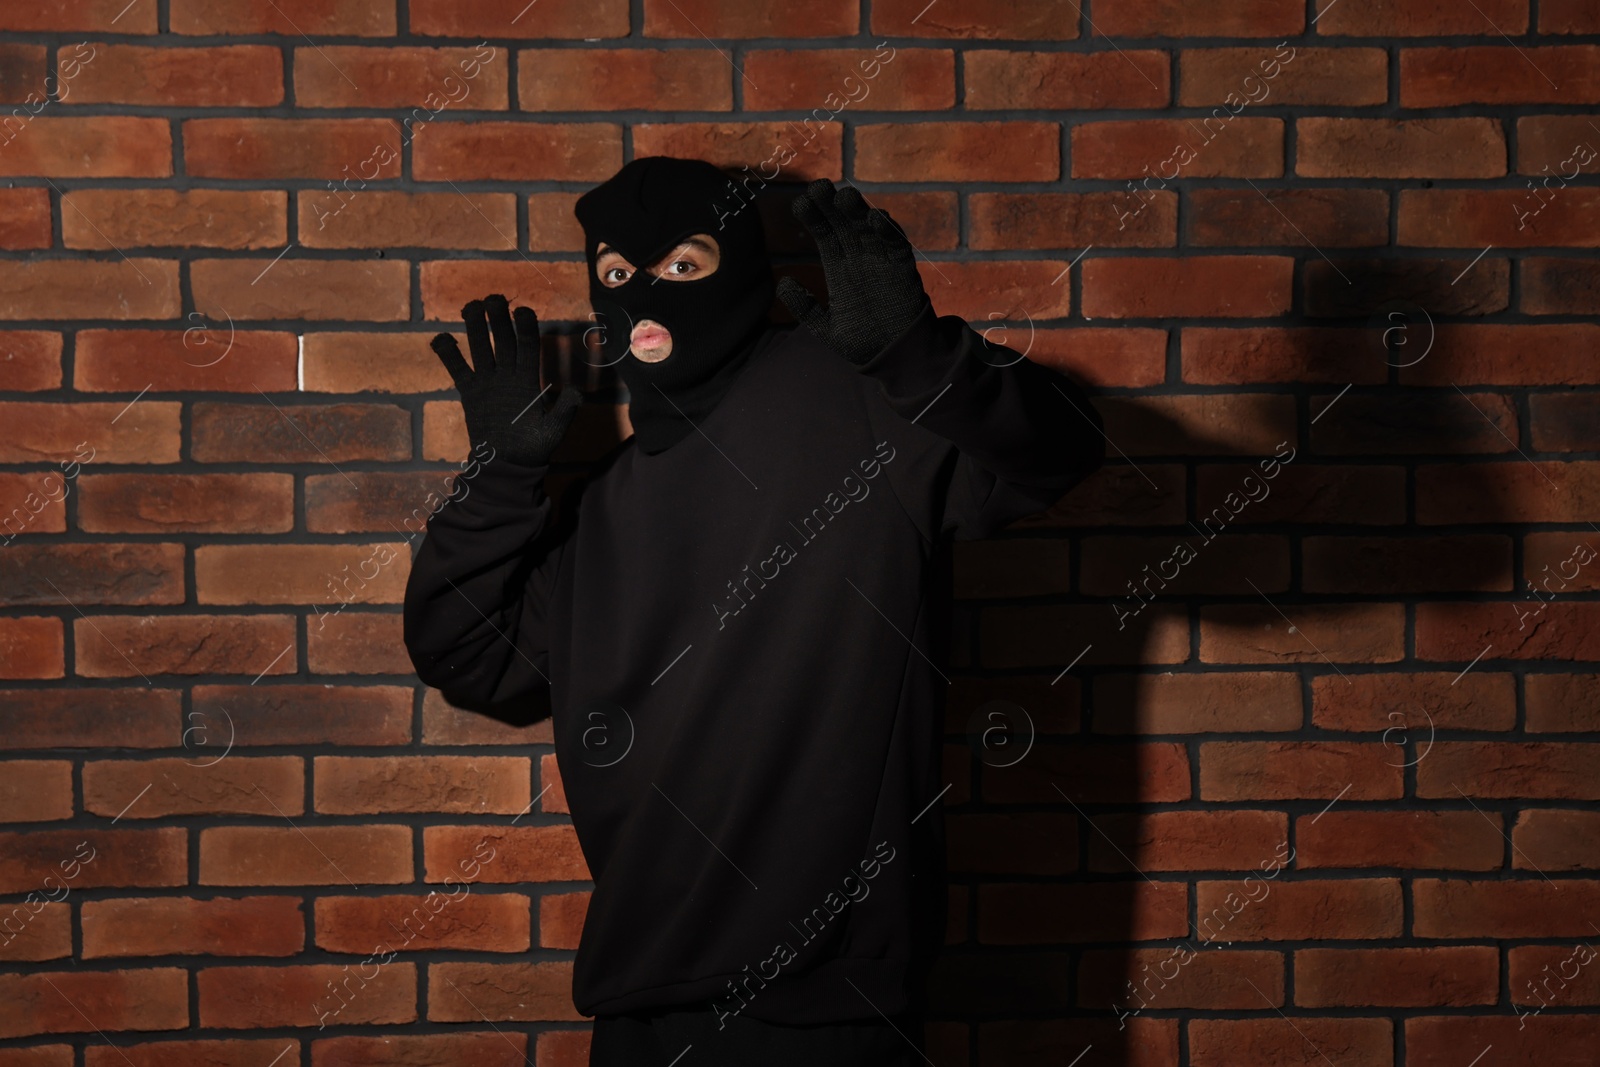 Photo of Thief in balaclava raising hands against red brick wall